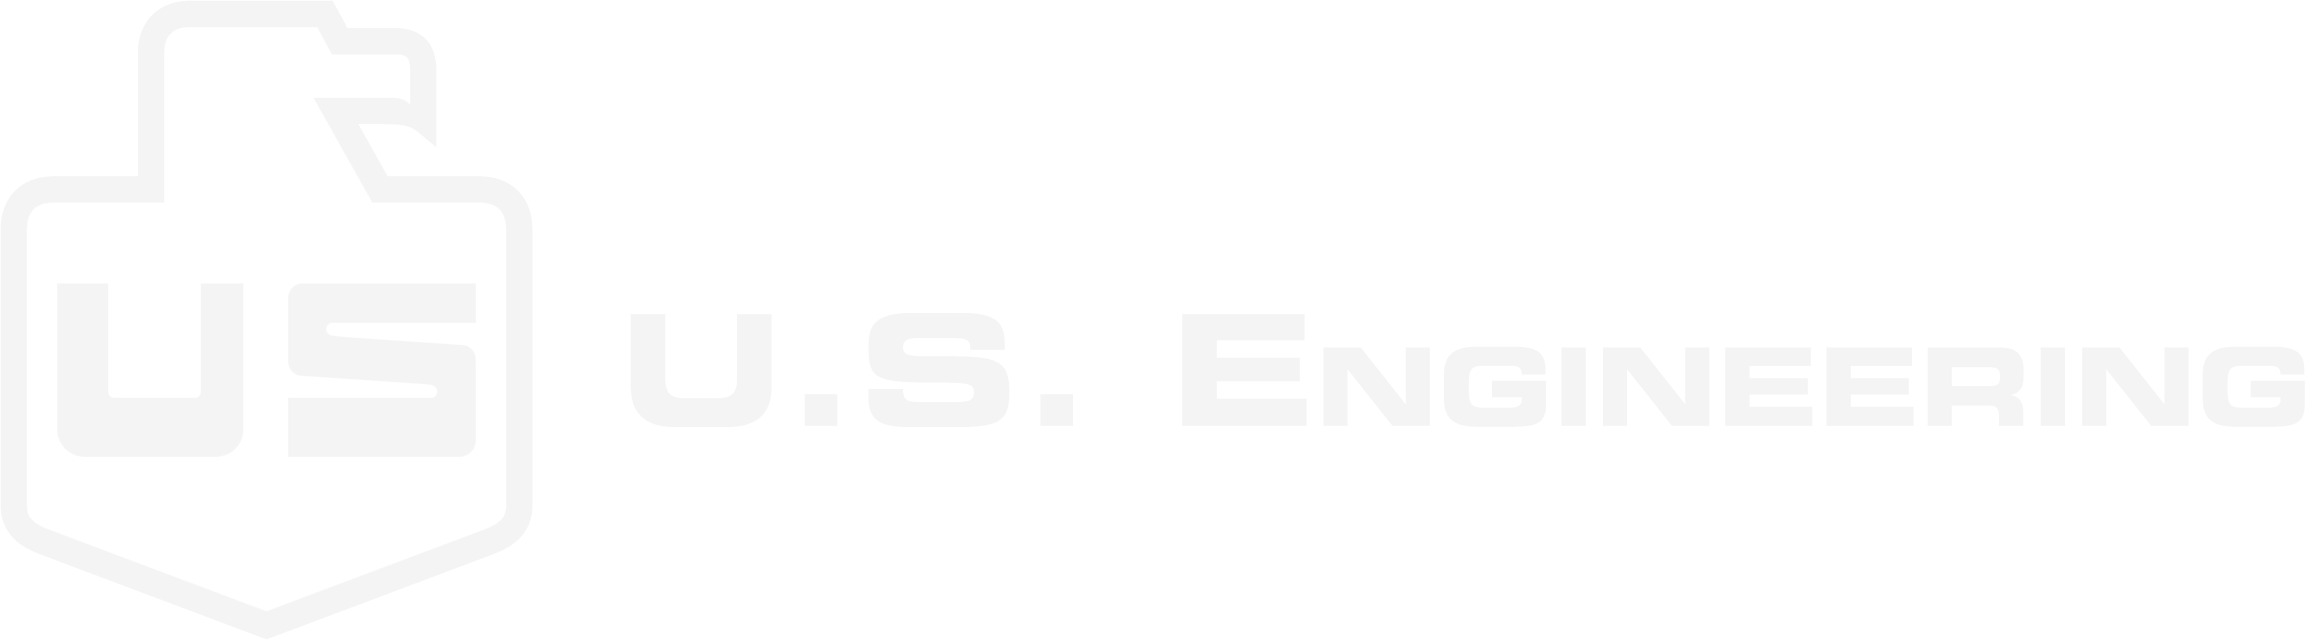 231218_us_engineering_logo_grey_04.png